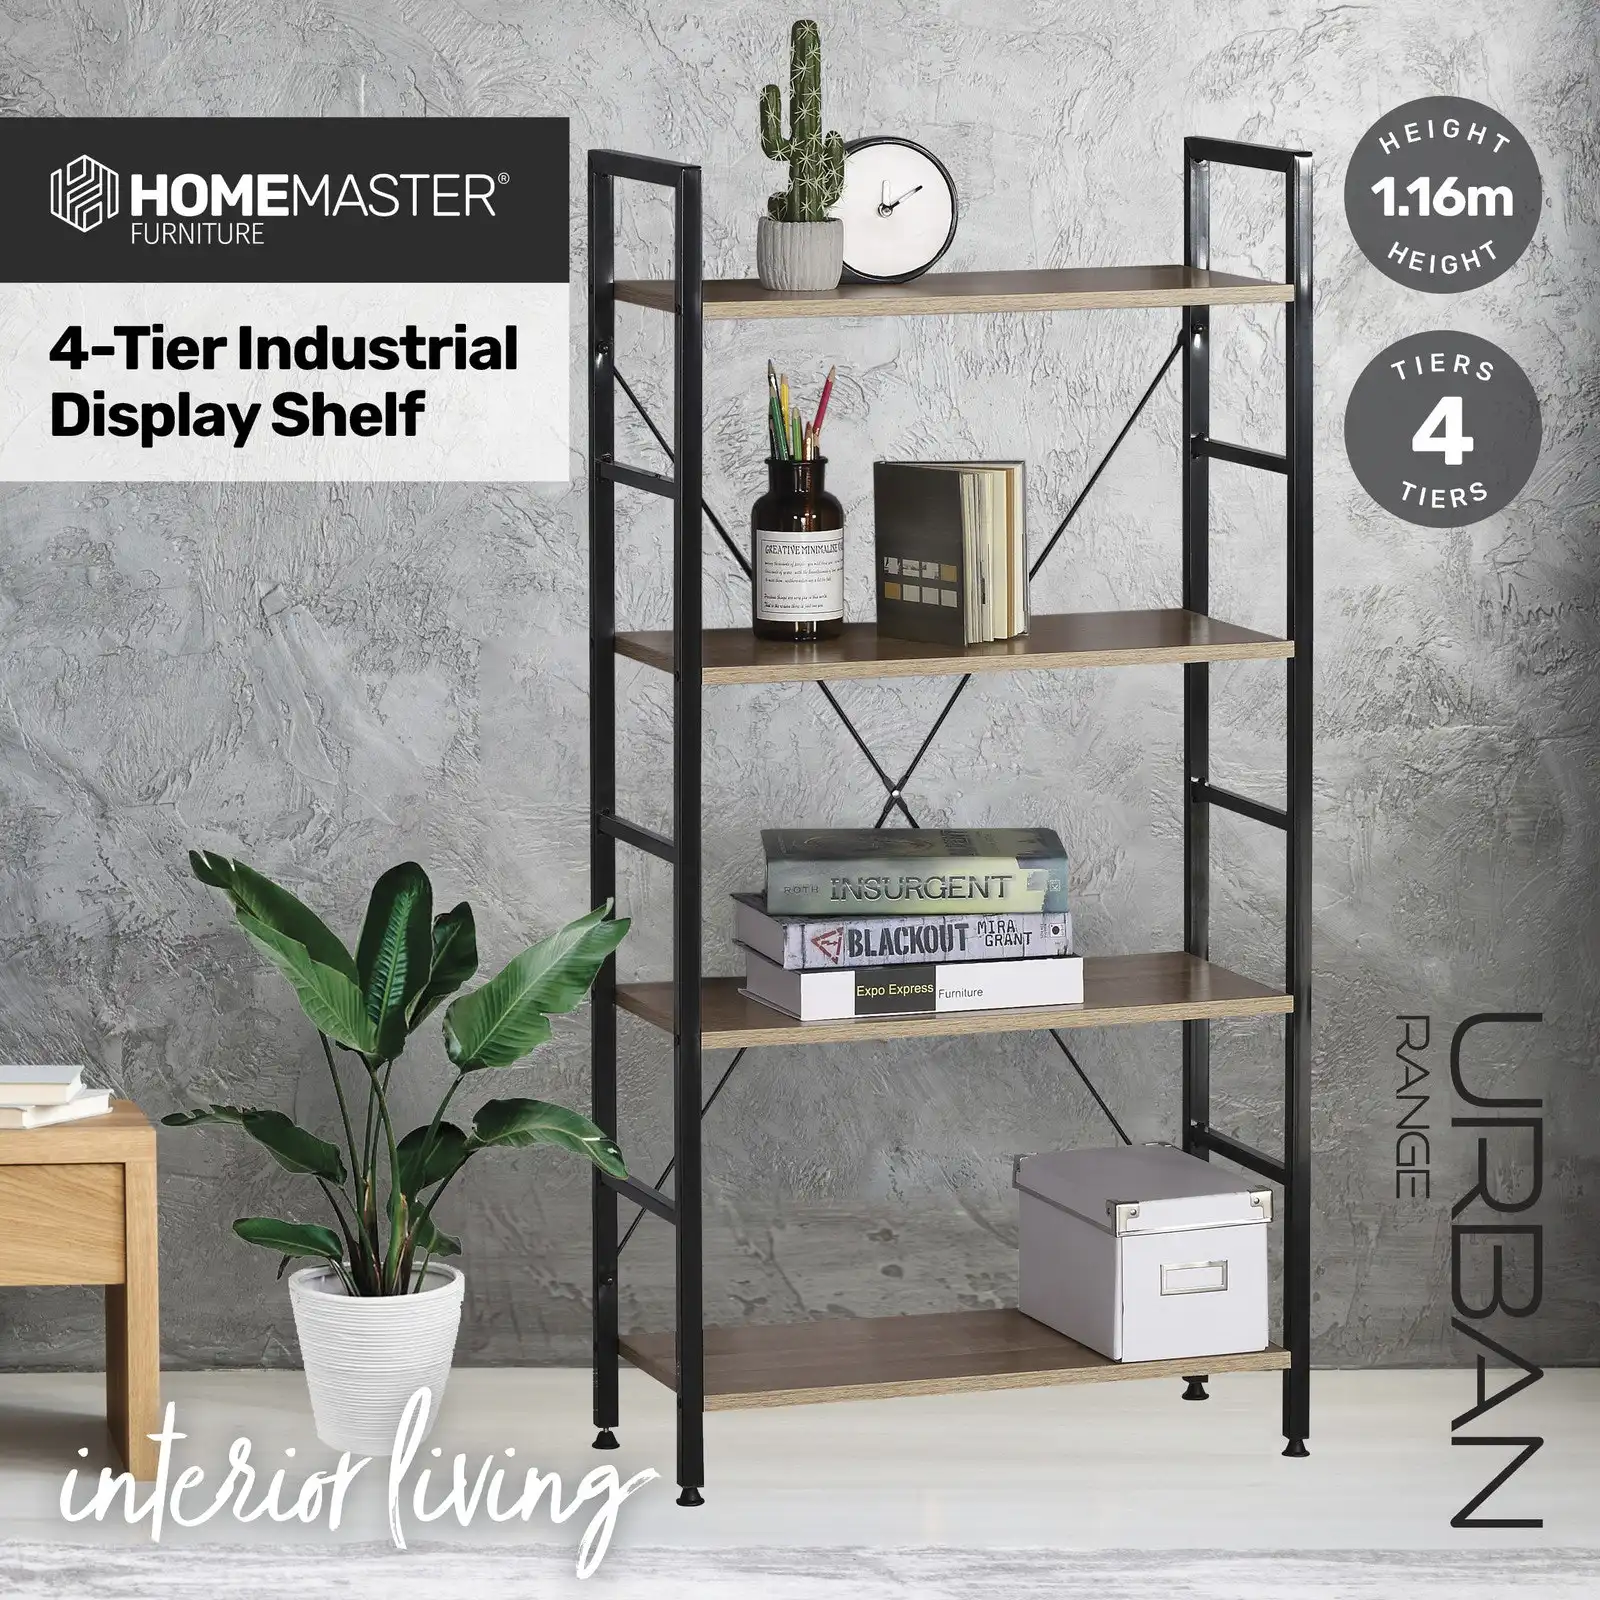 Home Master® Display Shelf 4 Tier Sleek Modern Industrial Design 1.16m